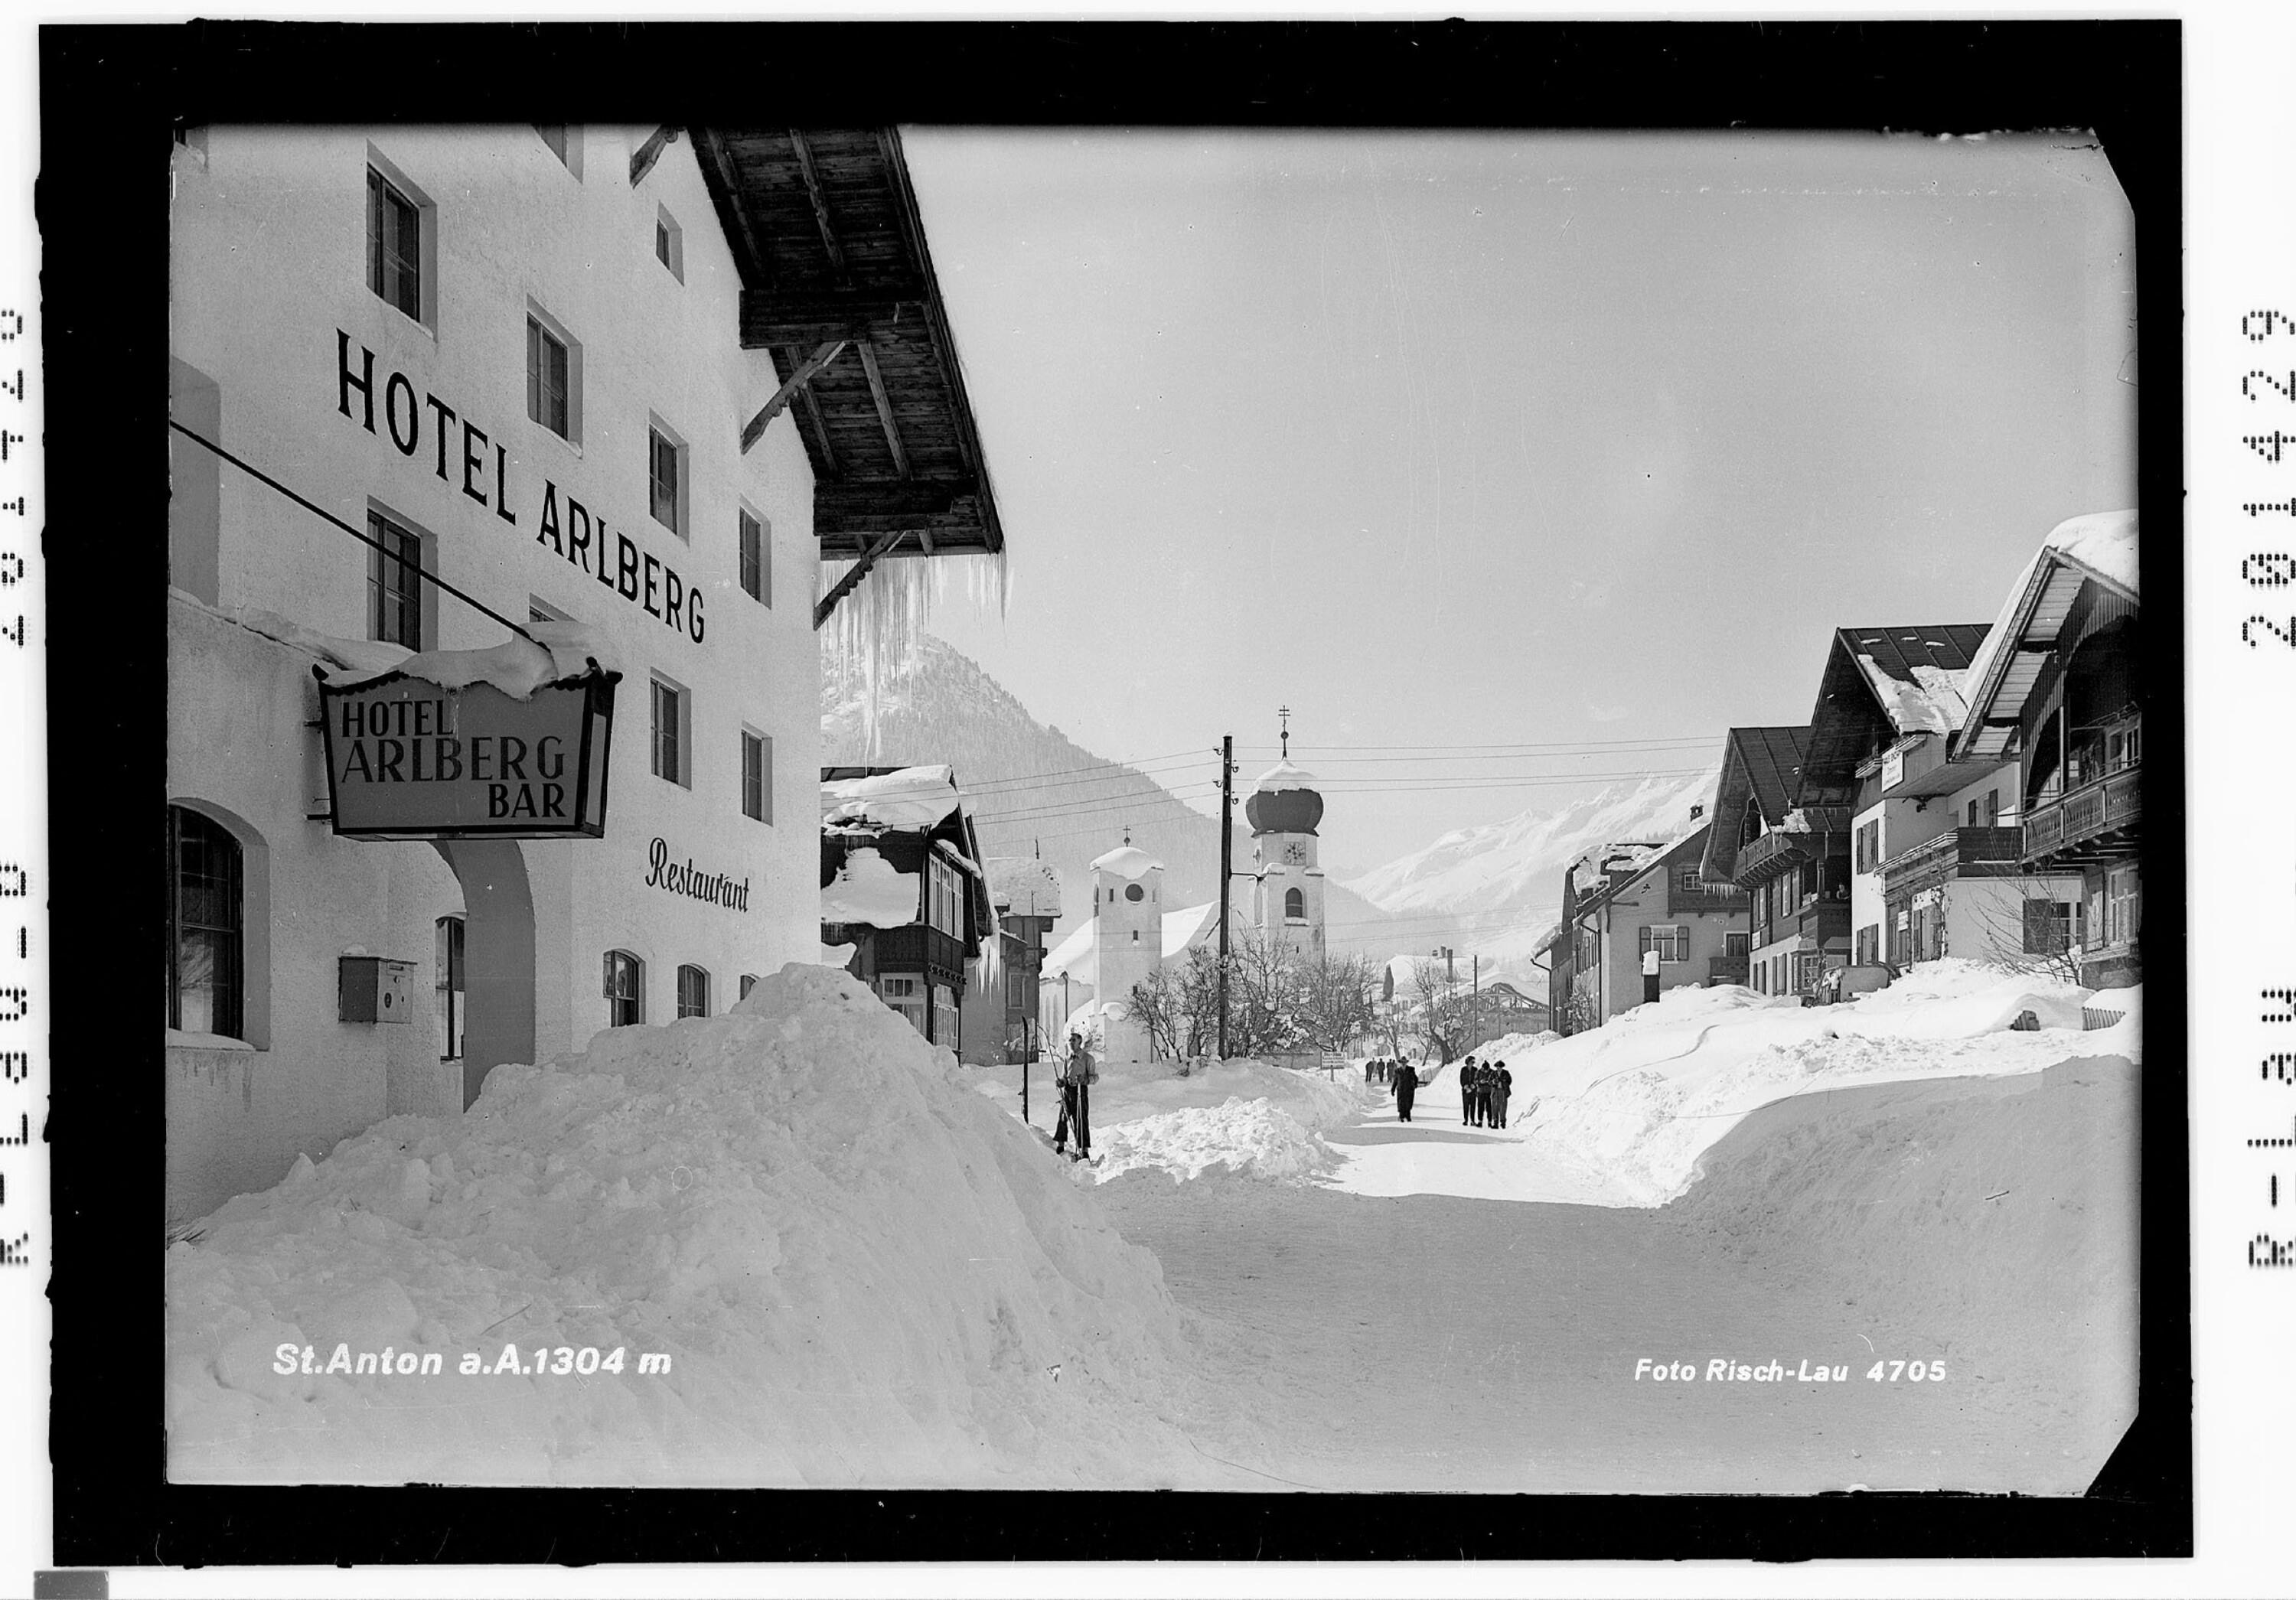 St.Anton am Arlberg 1304 m / Hotel Arlberg></div>


    <hr>
    <div class=